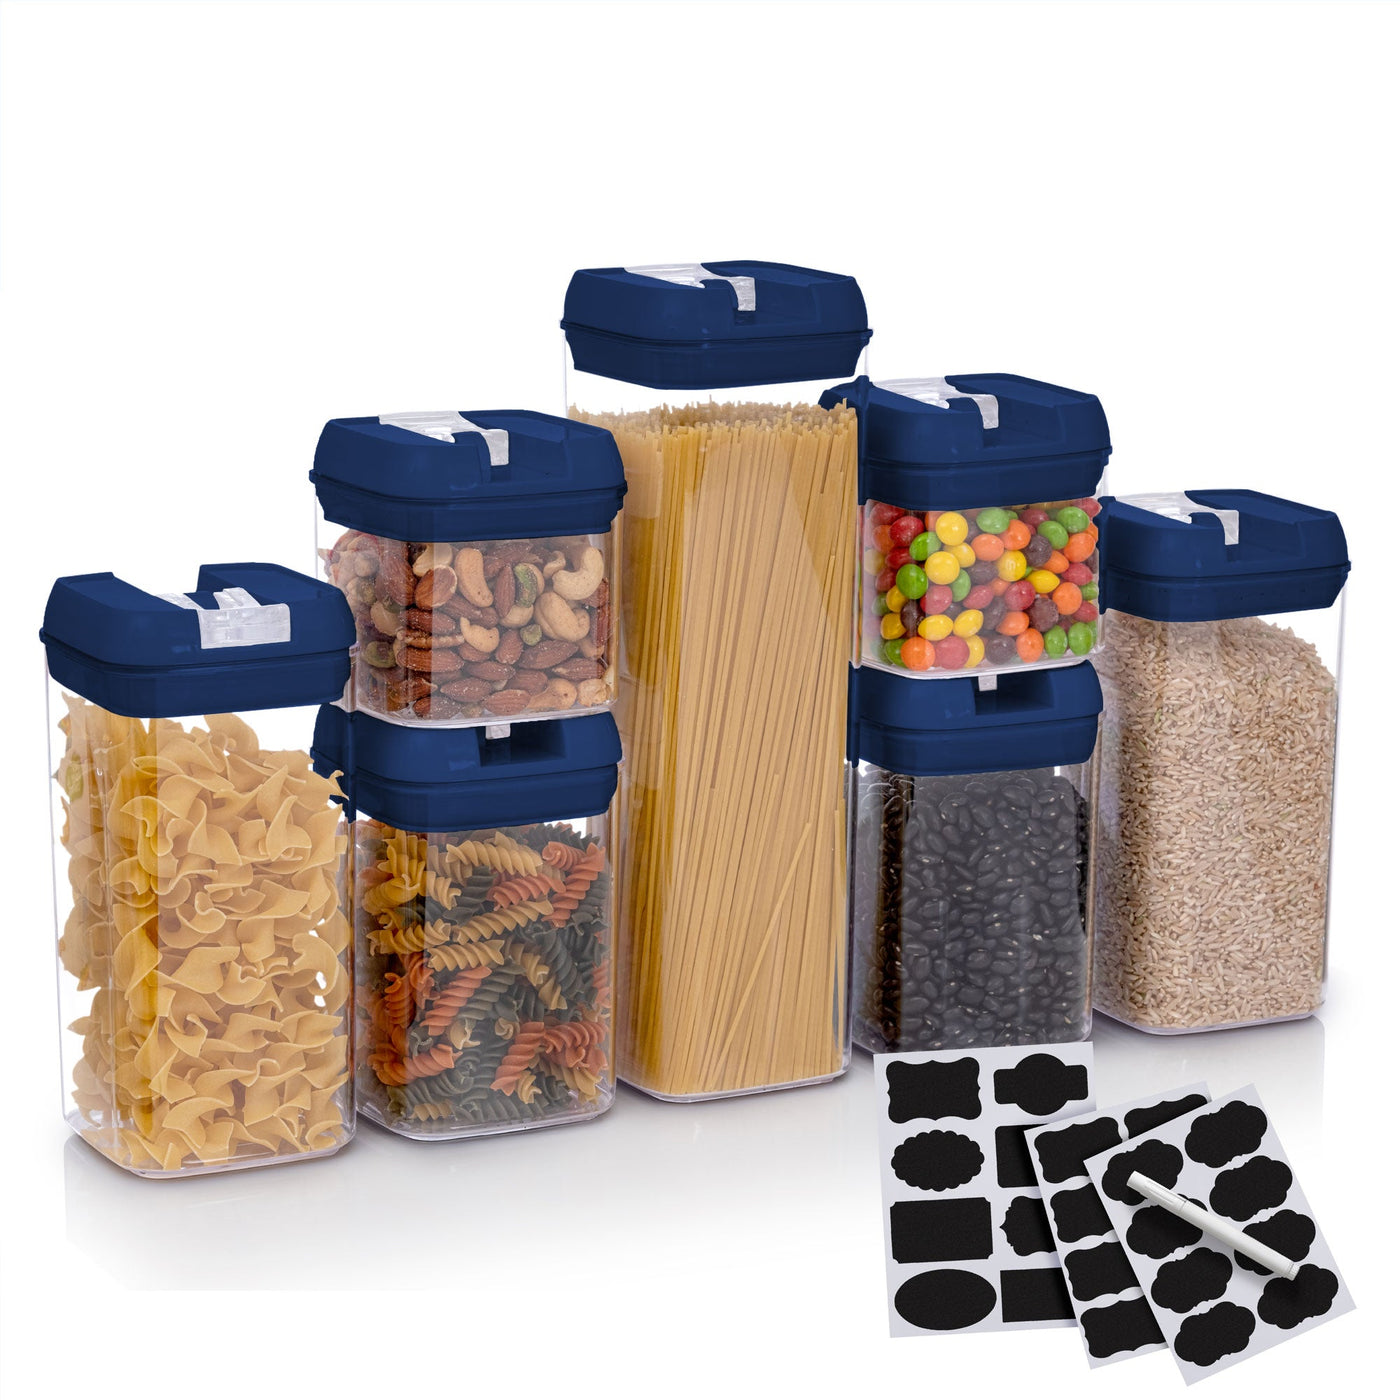 7-Piece Airtight Food Storage Container Set - Black